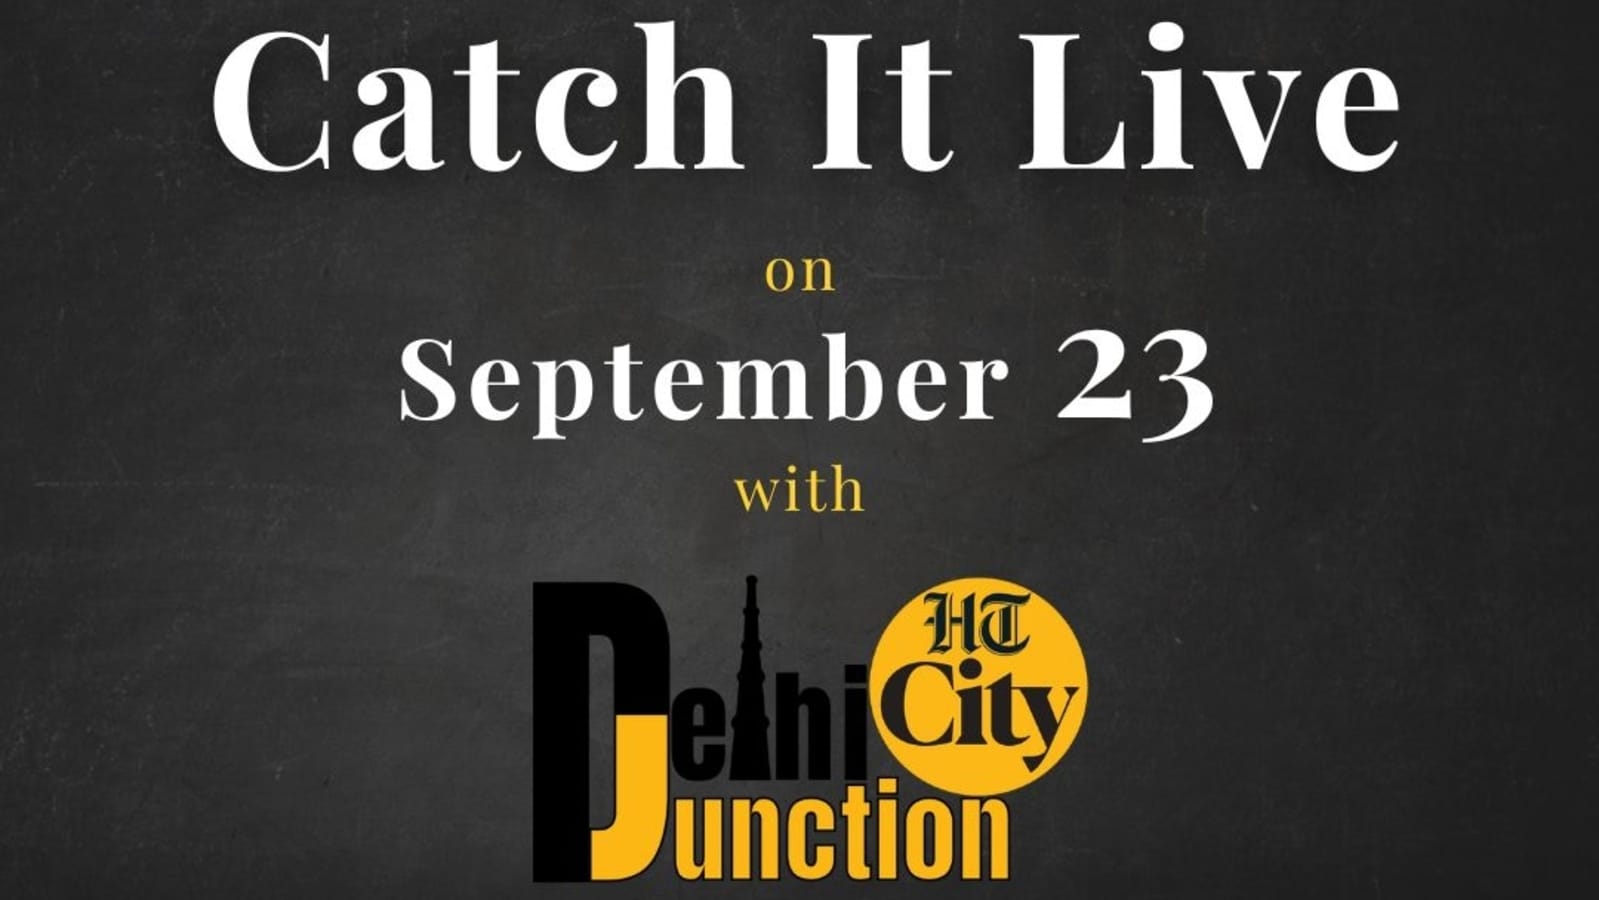 एचटी सिटी दिल्ली जंक्शन: 23 सितंबर को कैच इट लाइव